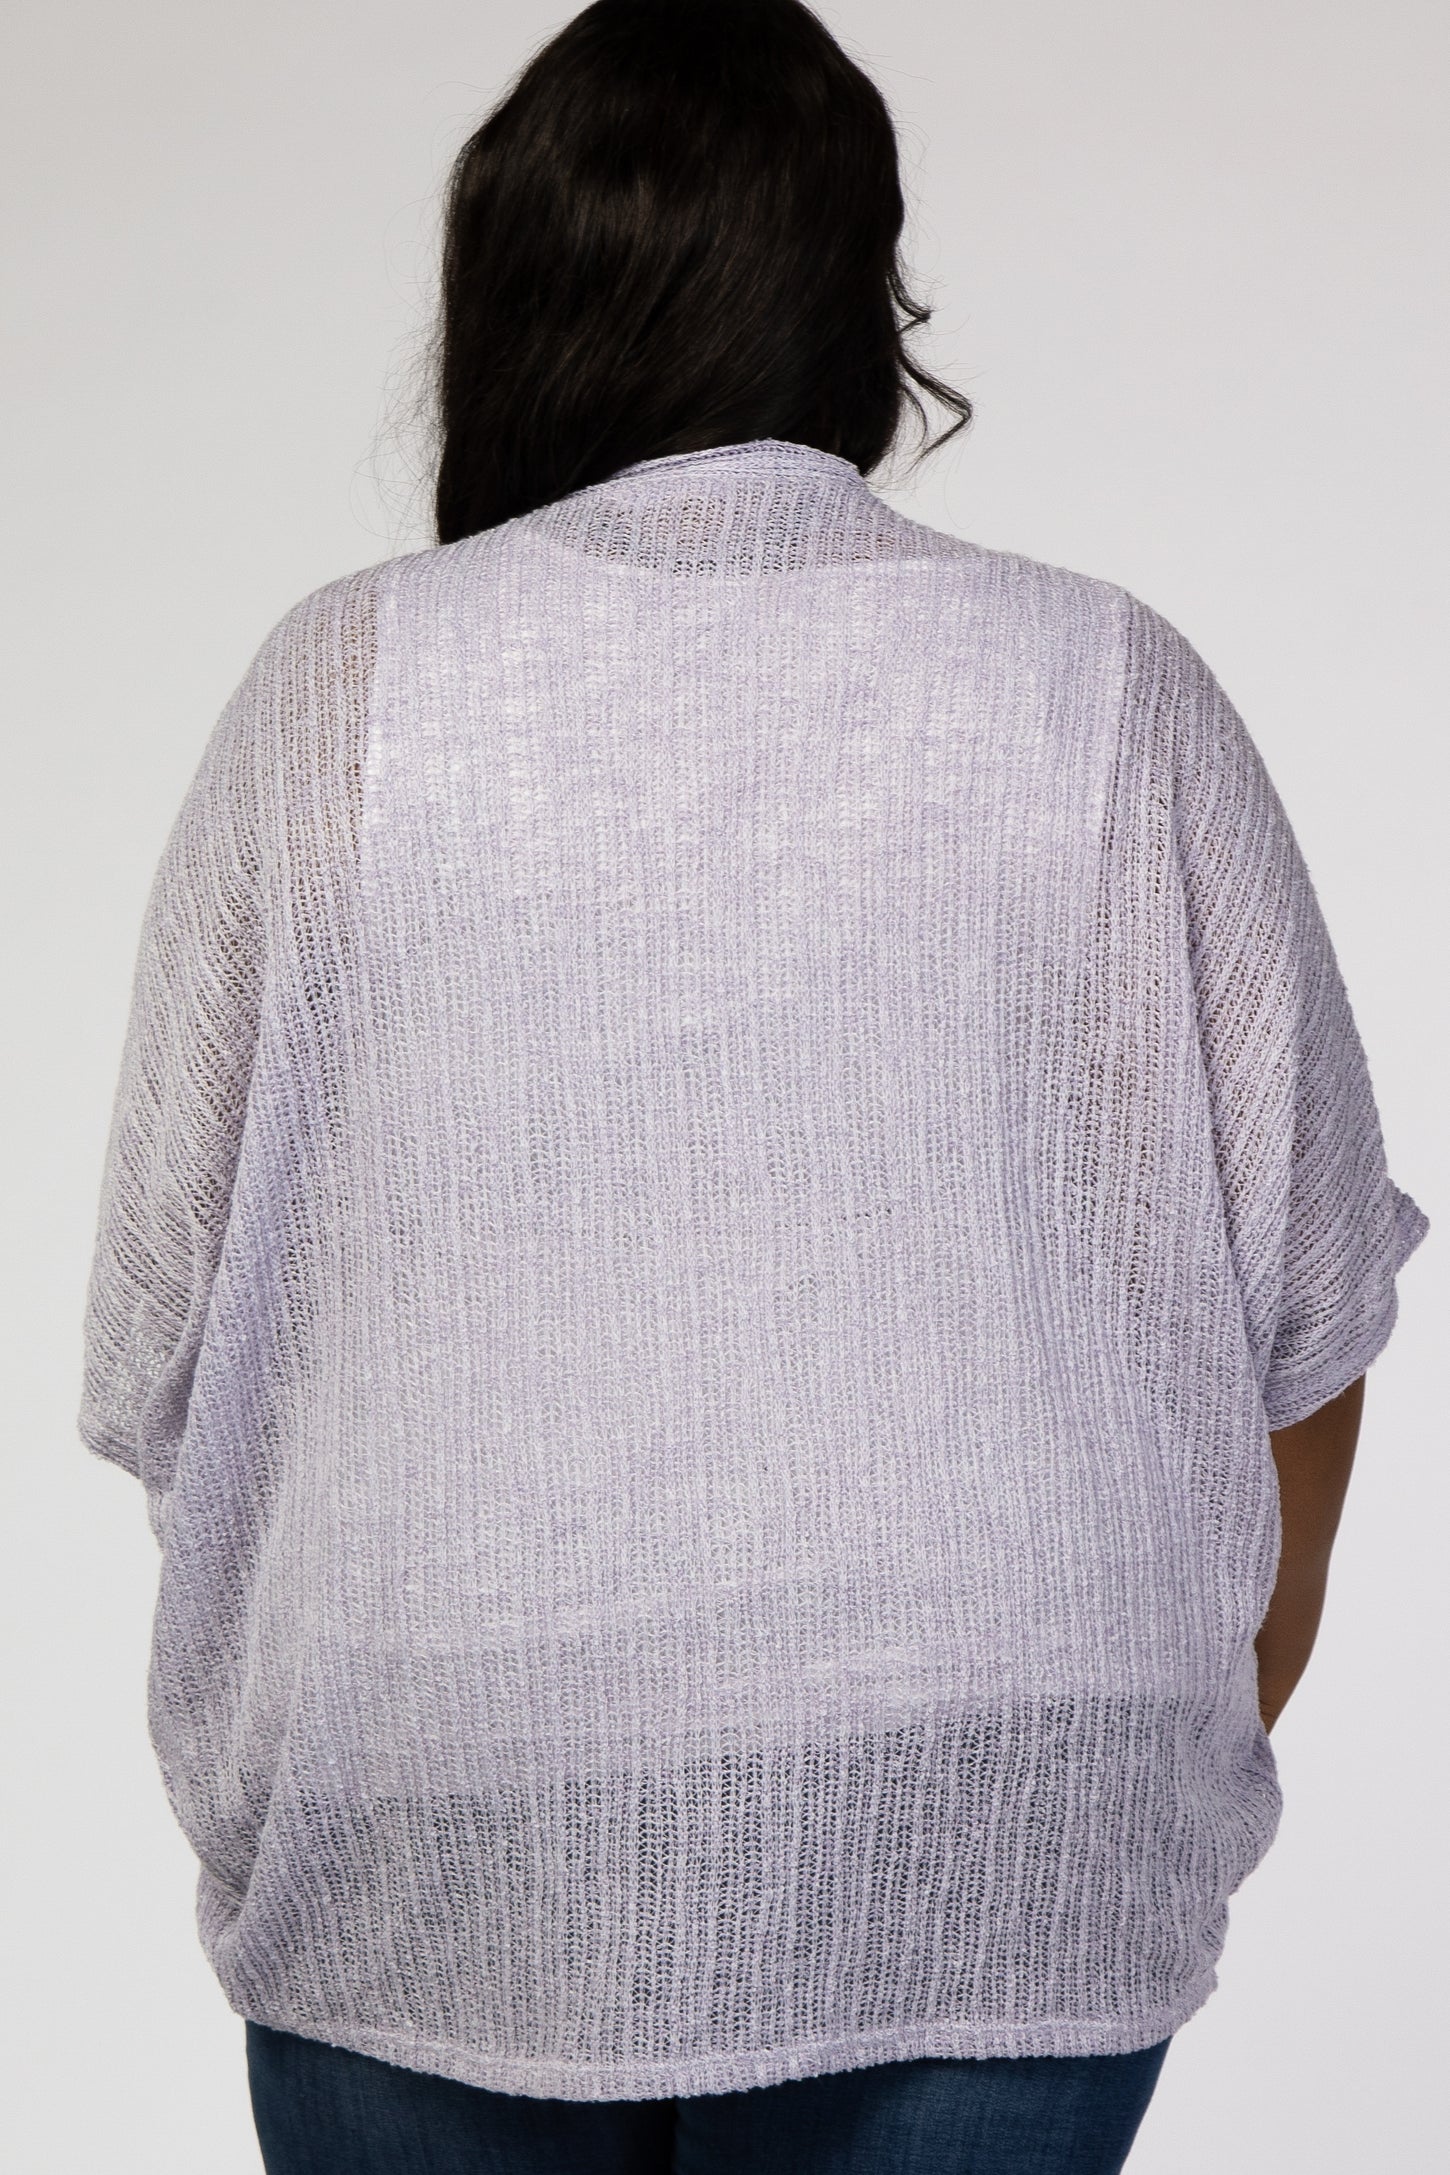 Lavender Woven Knit Dolman Plus Cover Up